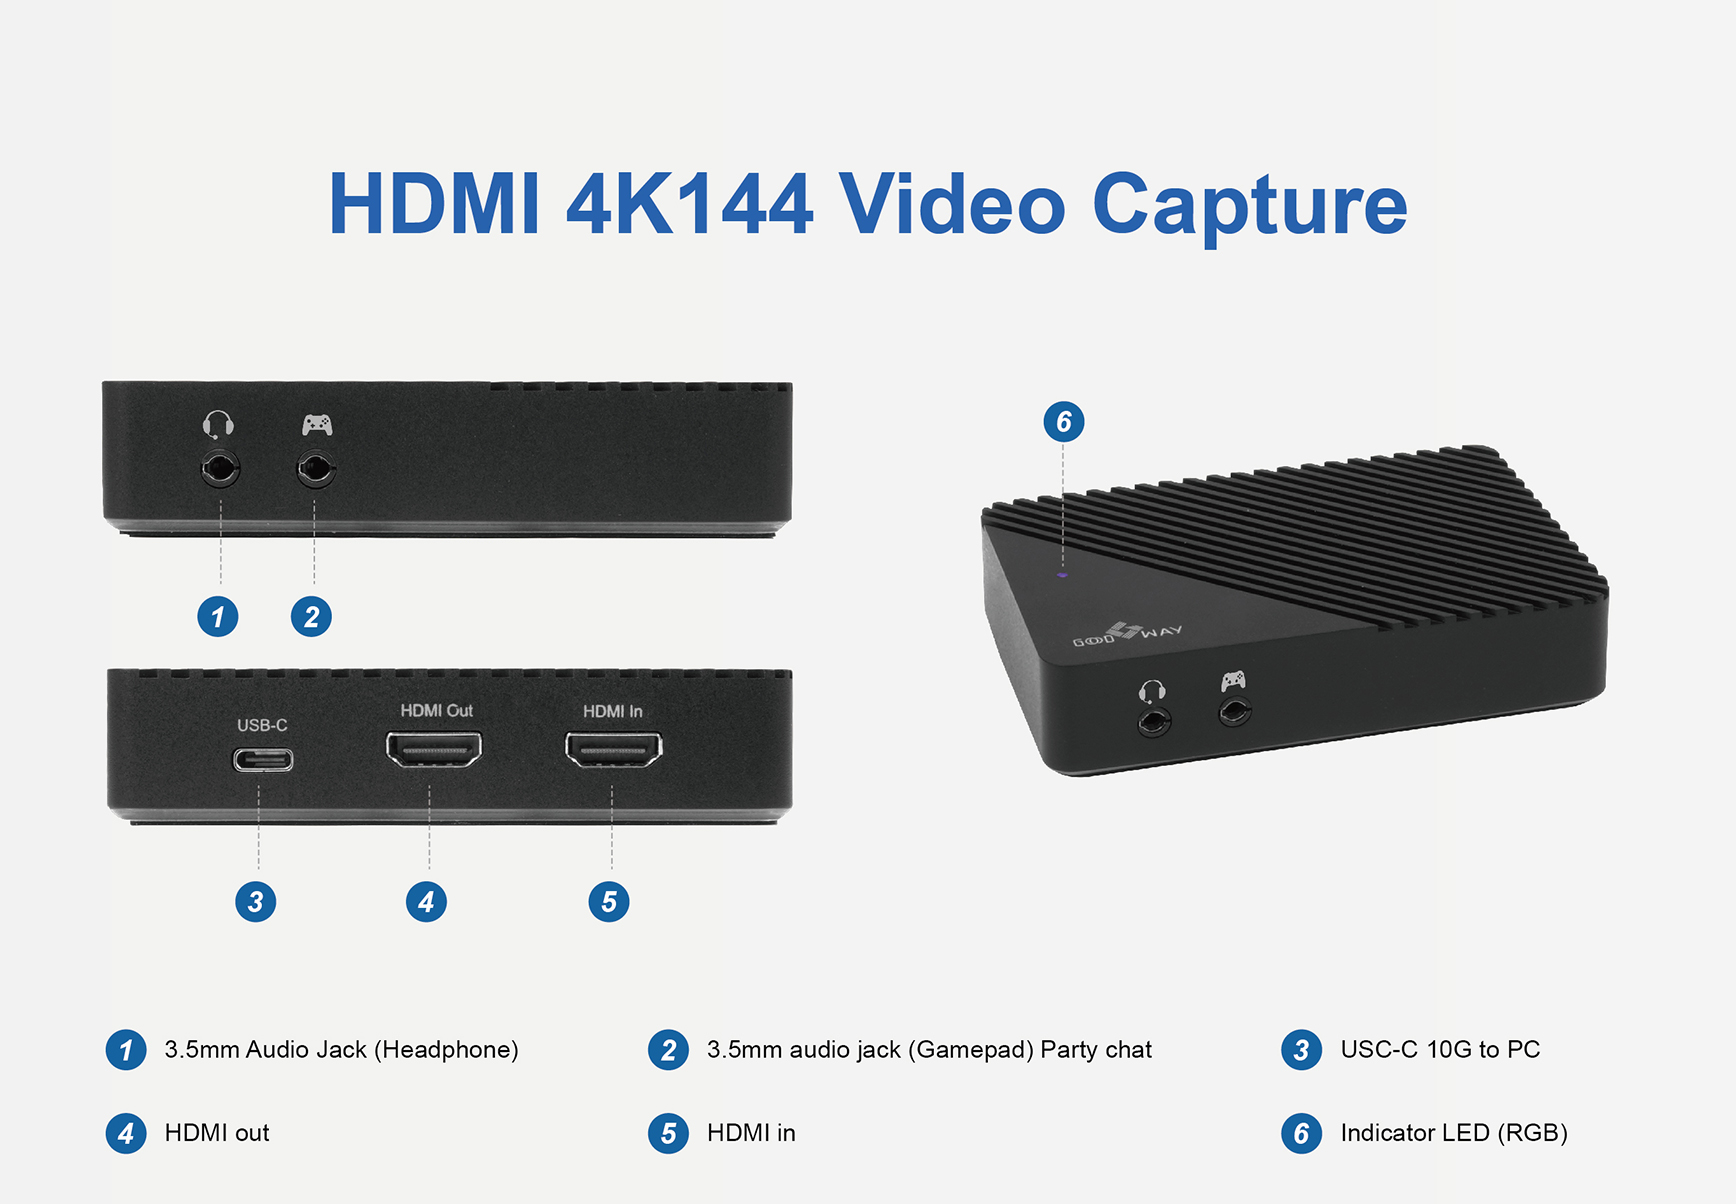 VUZ7260 HDMI 4K144 Video Capture